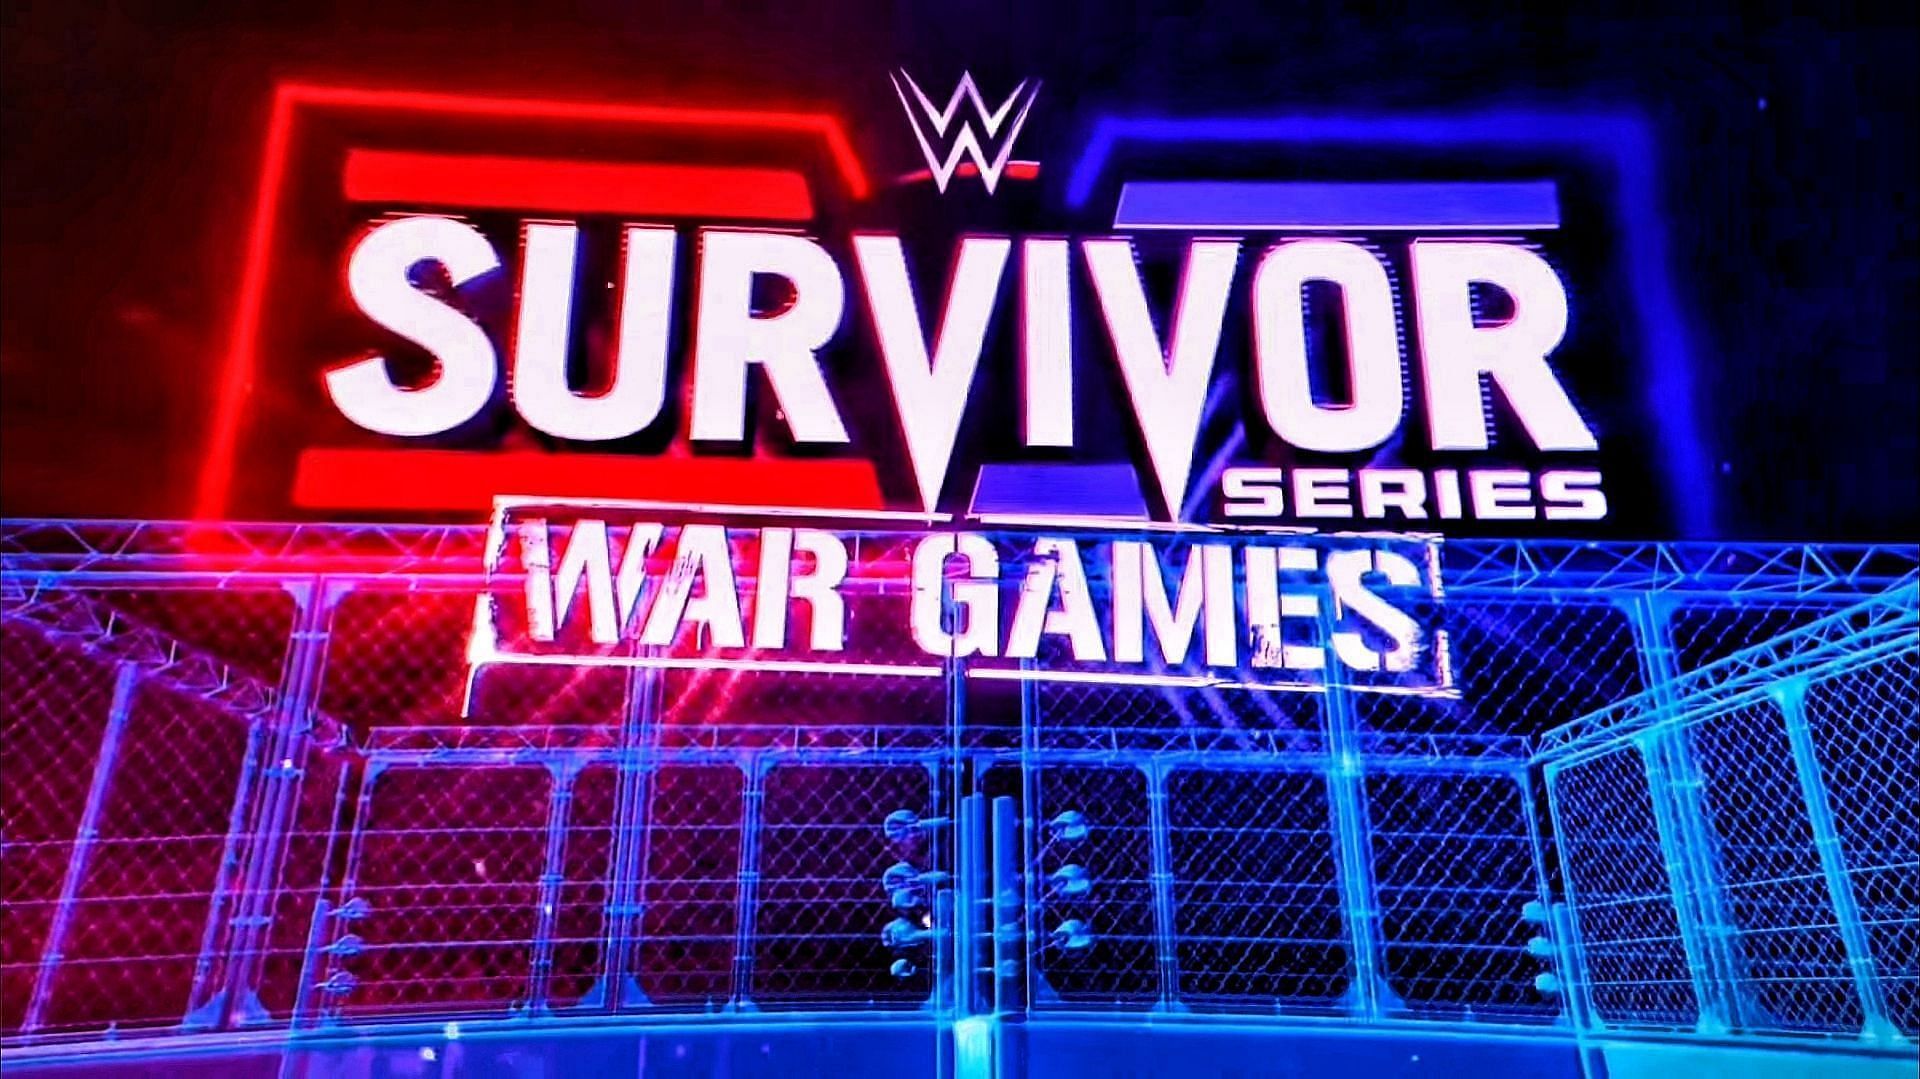 Survivor Series is scheduled for November 26th